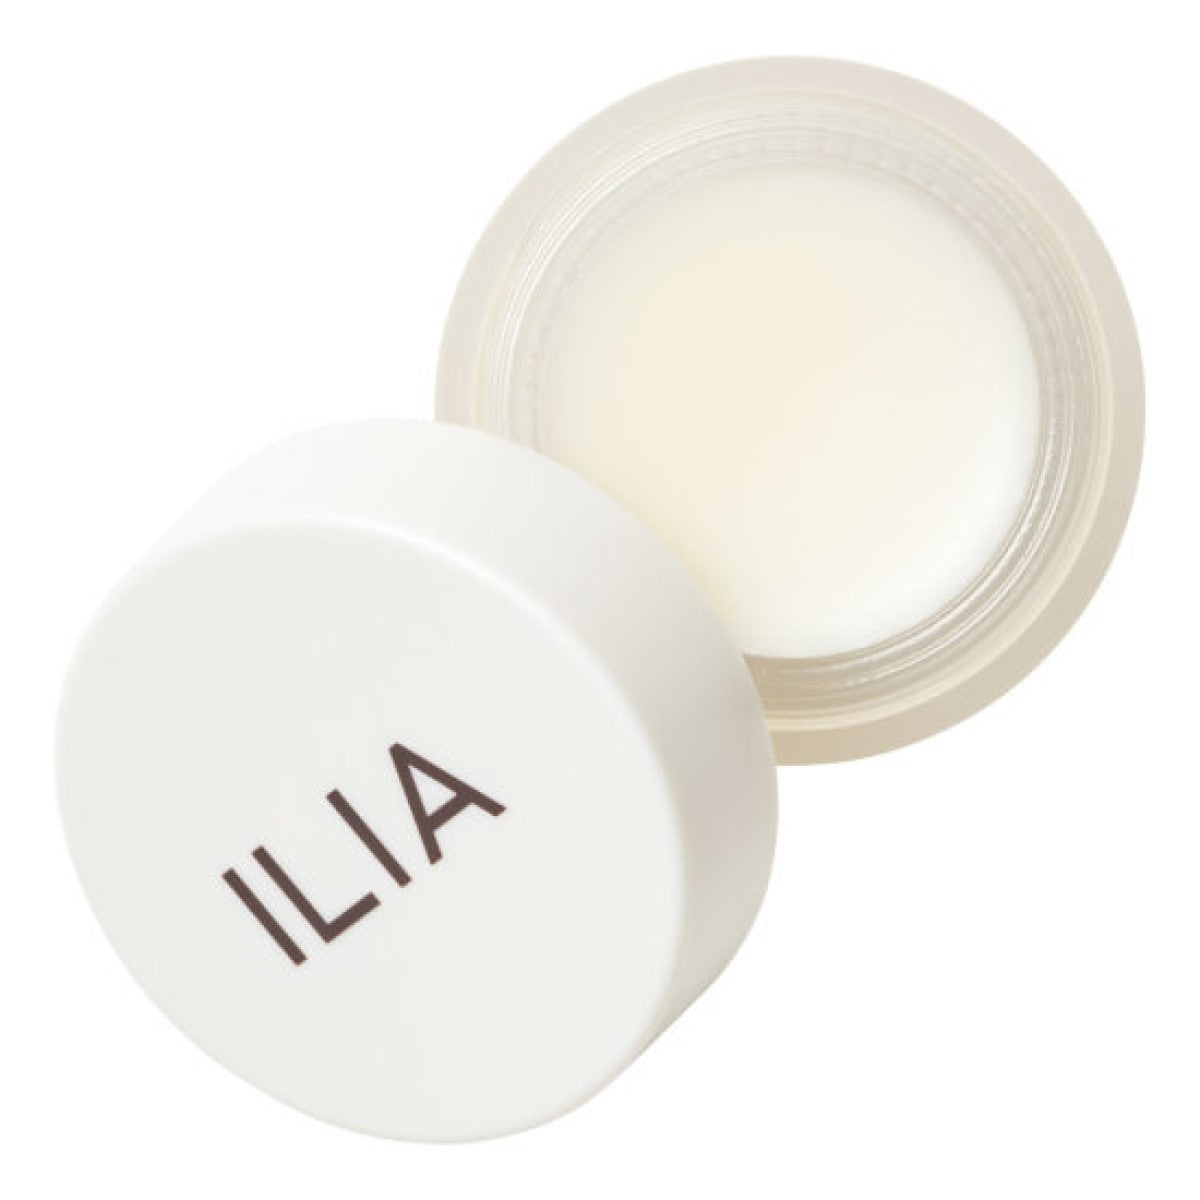 Primary Image of ILIA Lip Wrap Hydrating Mask